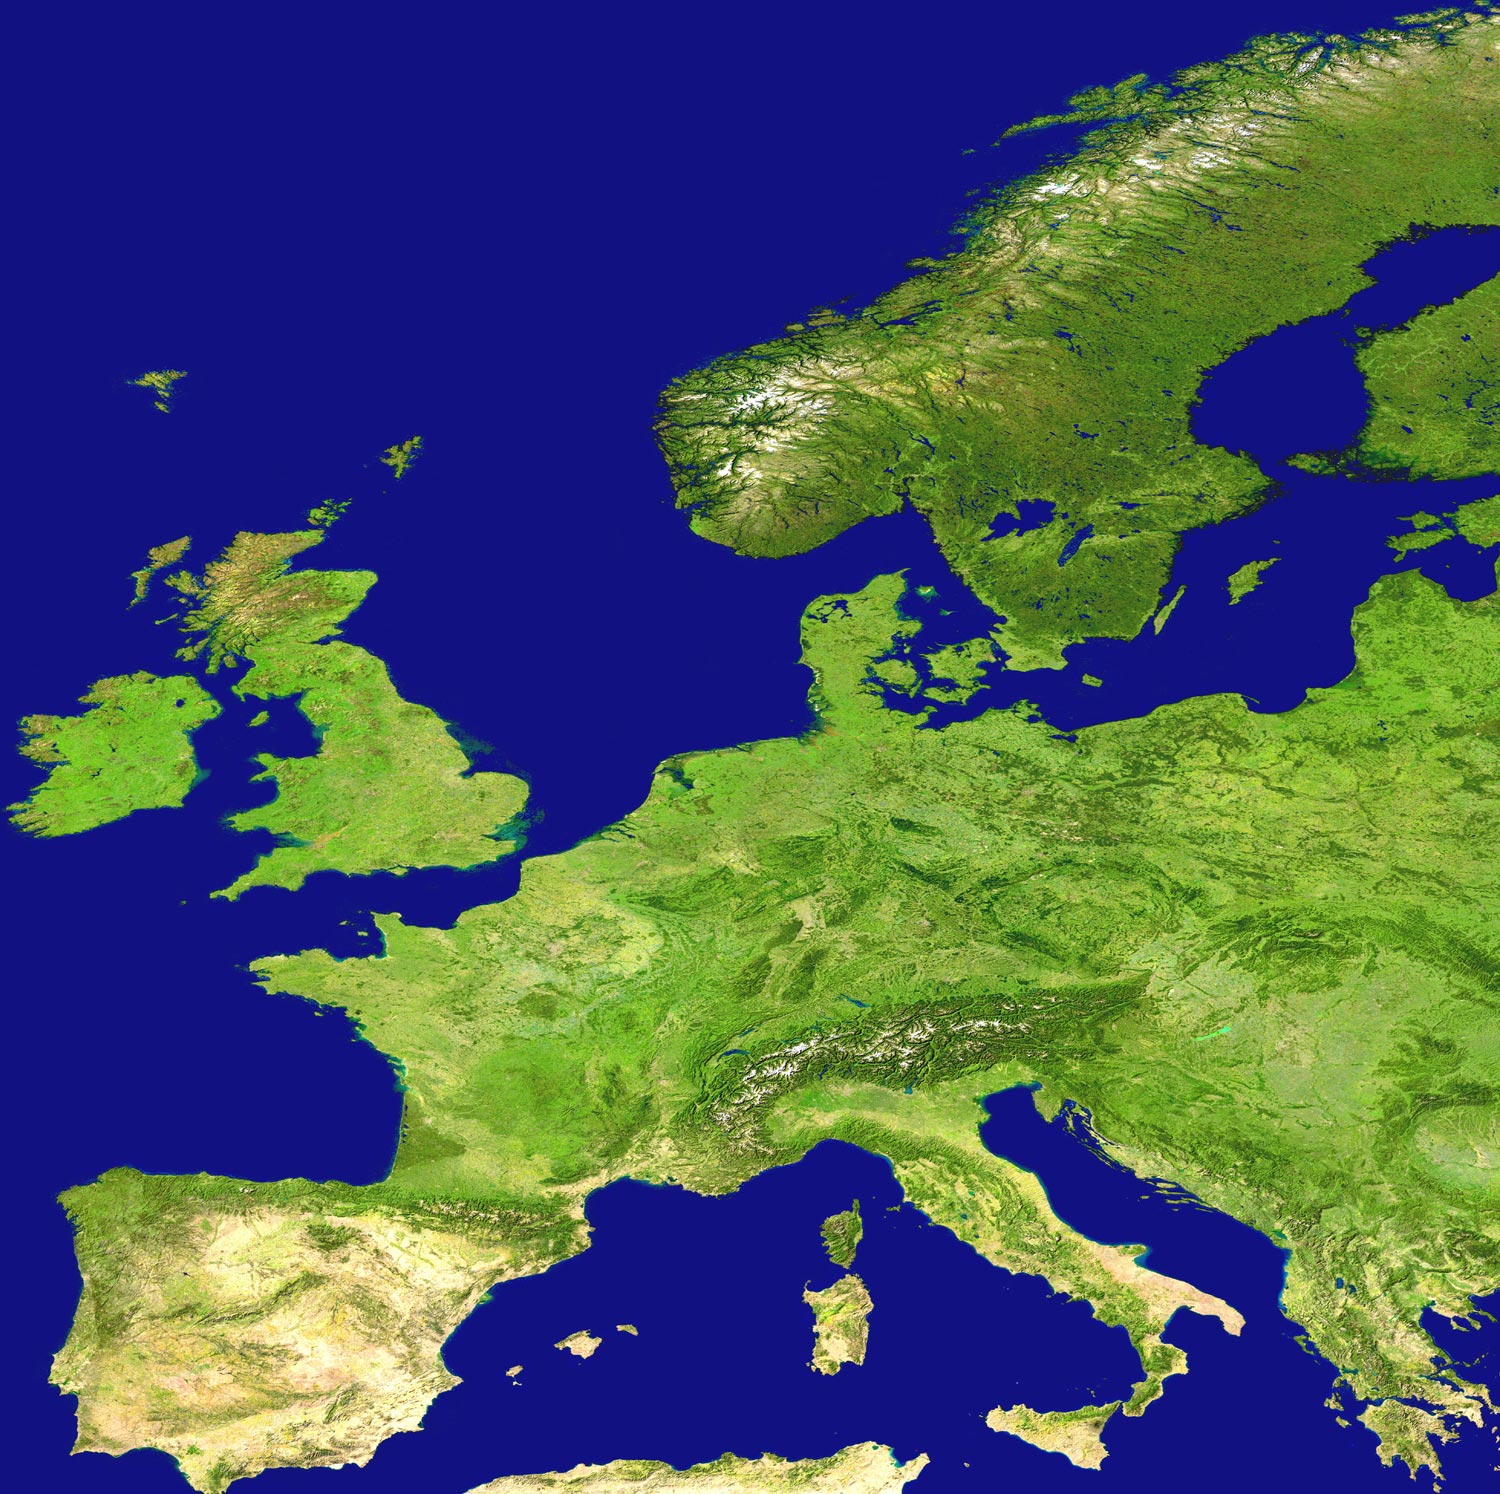 Europe-image.jpg